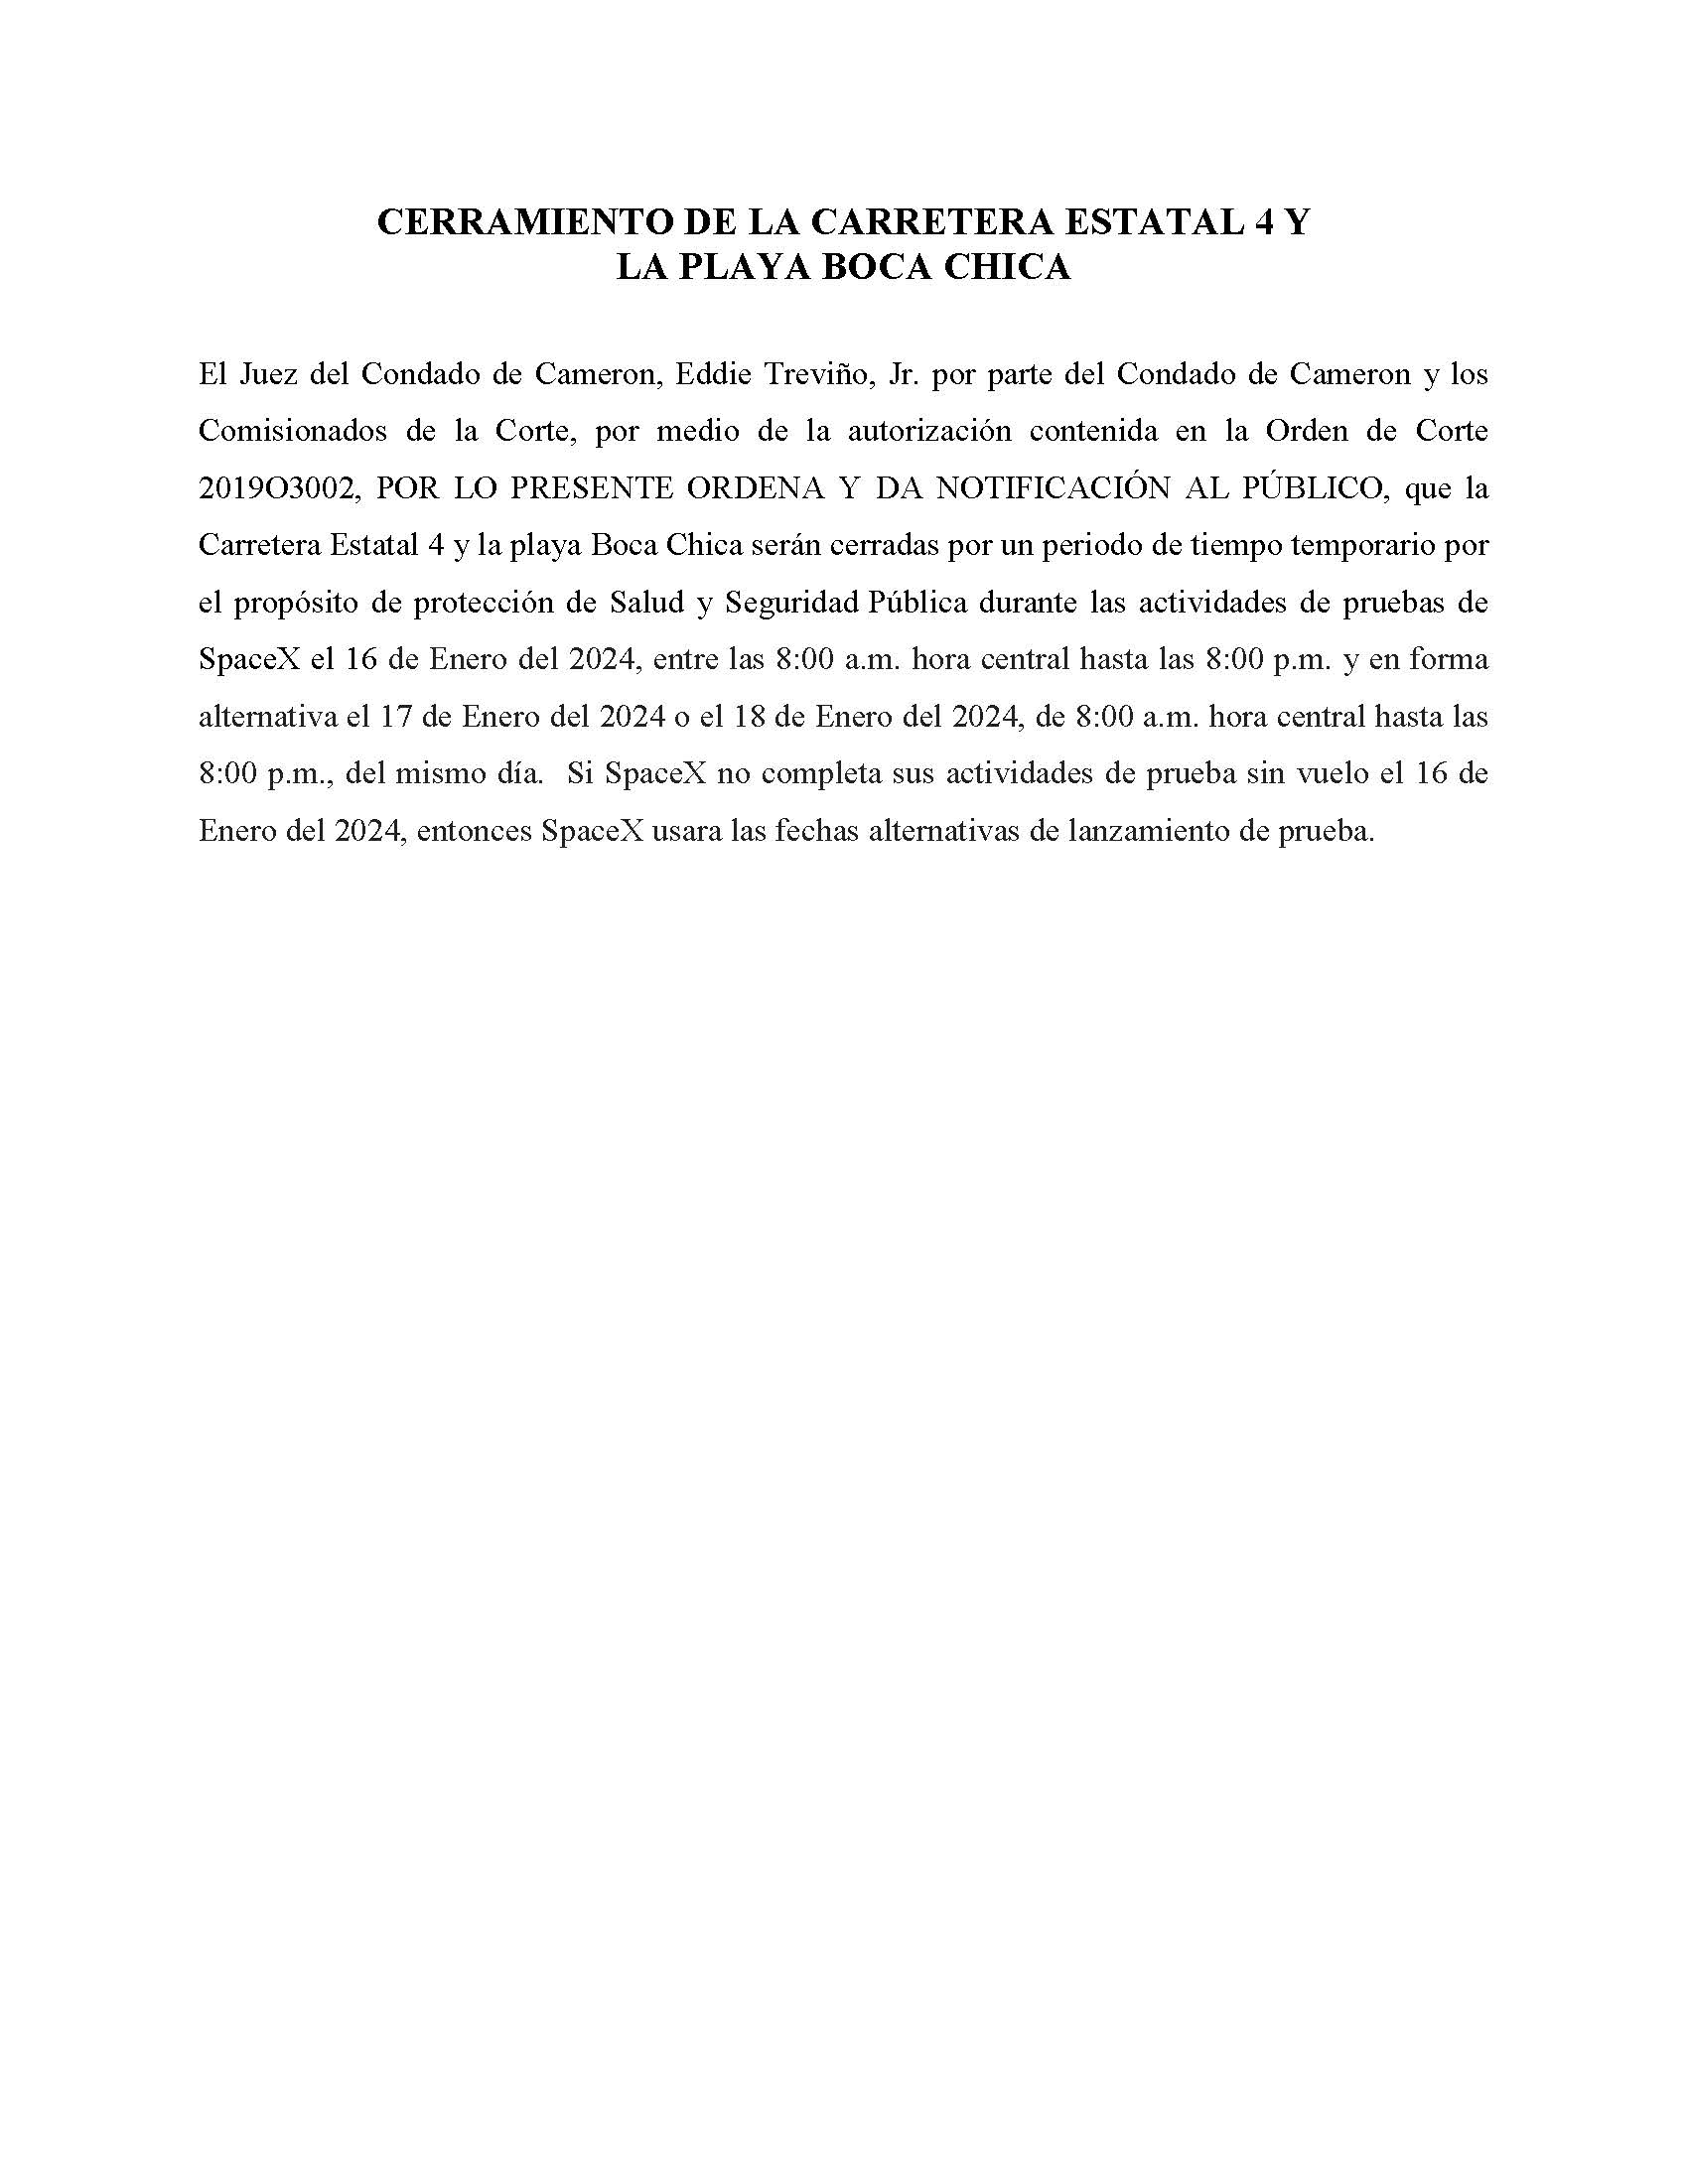 ORDER.CLOSURE OF HIGHWAY 4 Y LA PLAYA BOCA CHICA.SPANISH.01.16.24